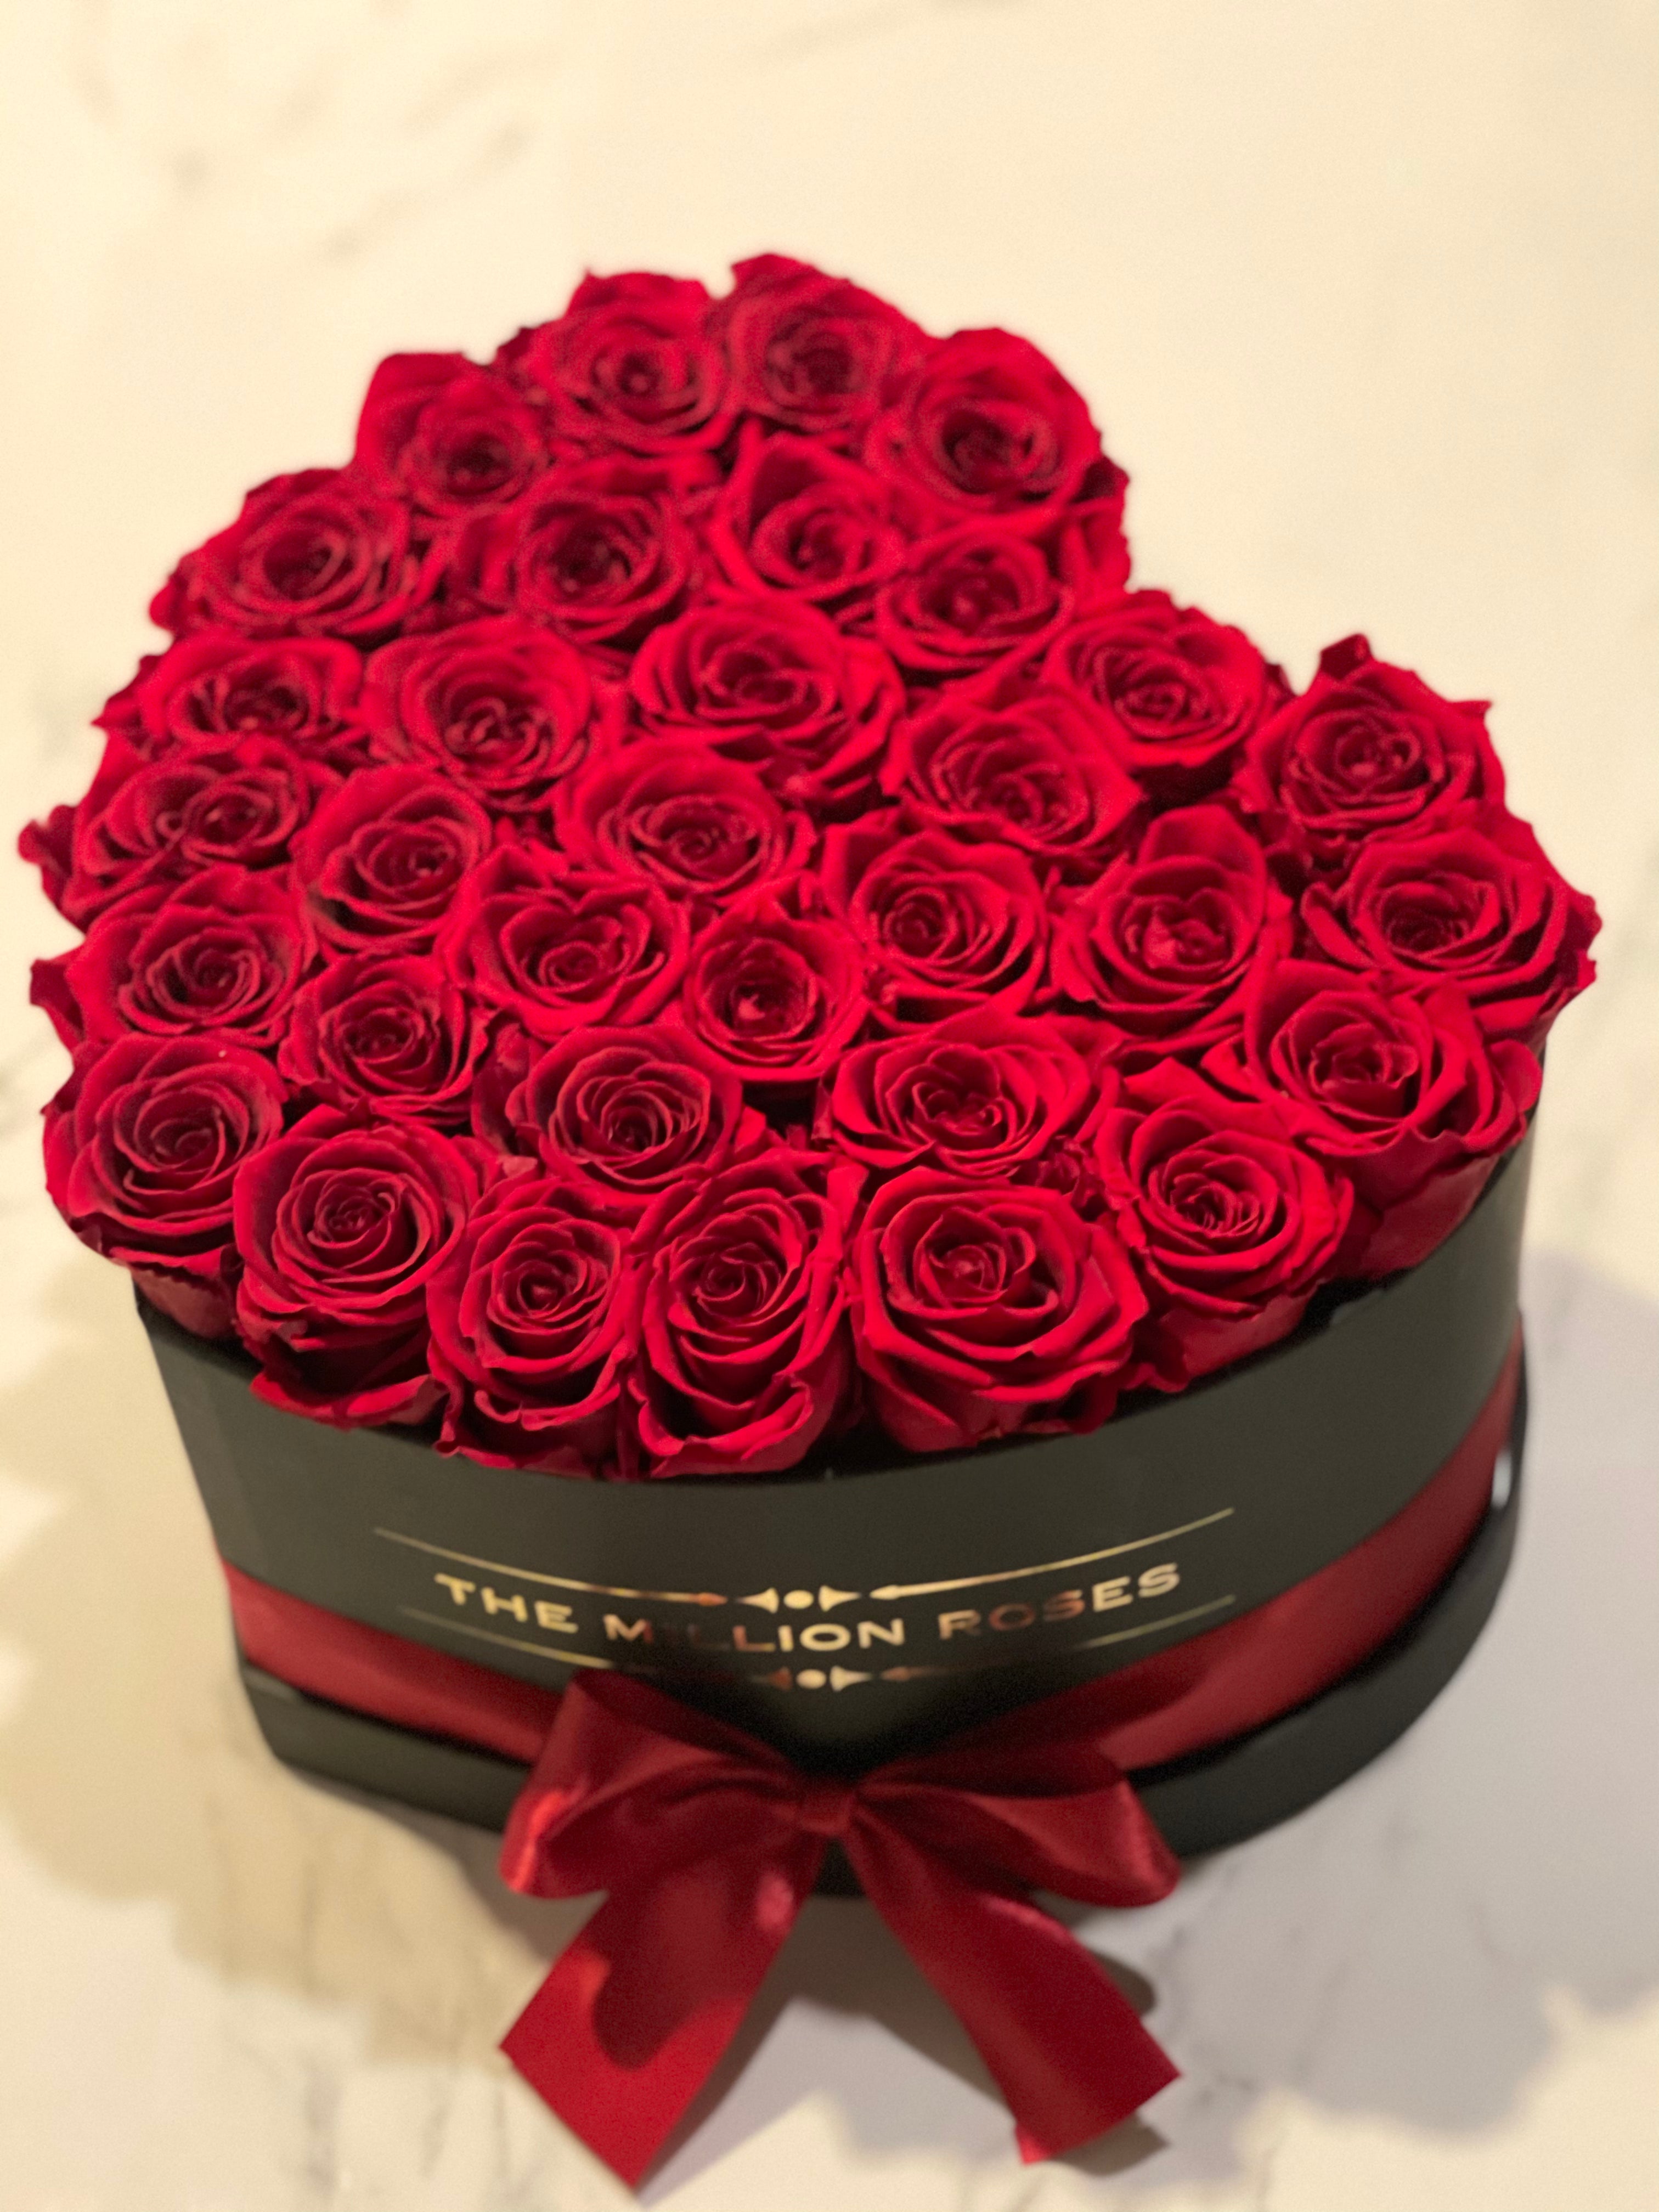 Inimă - trandafiri naturali rosii - Cutie neagră